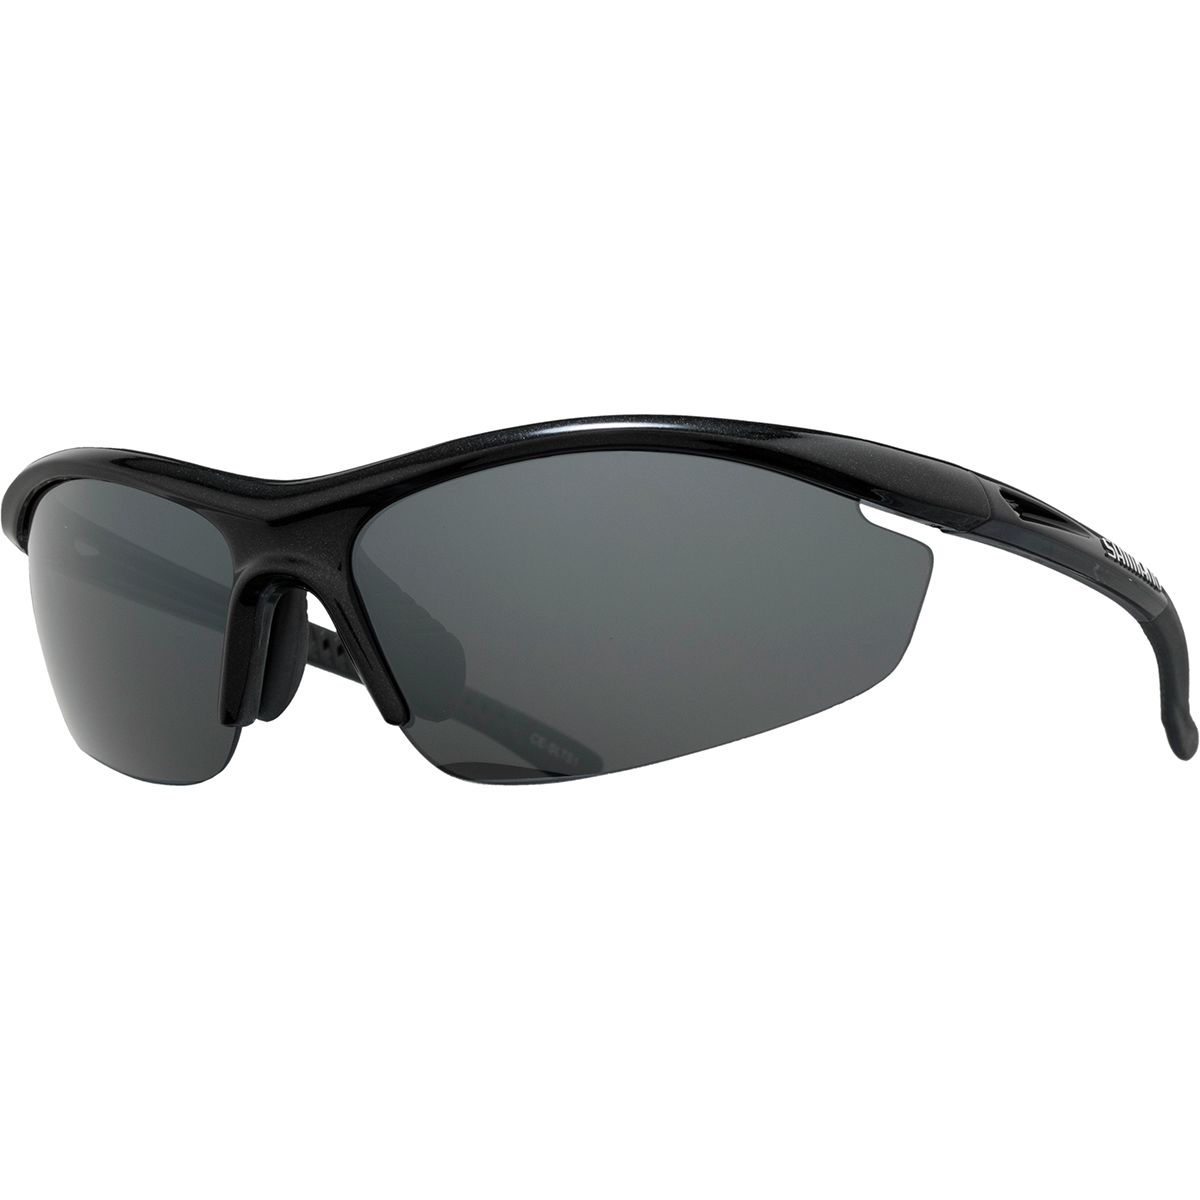 Shimano Solstice S Cycling Sunglasses - CE-SLTS - Men's